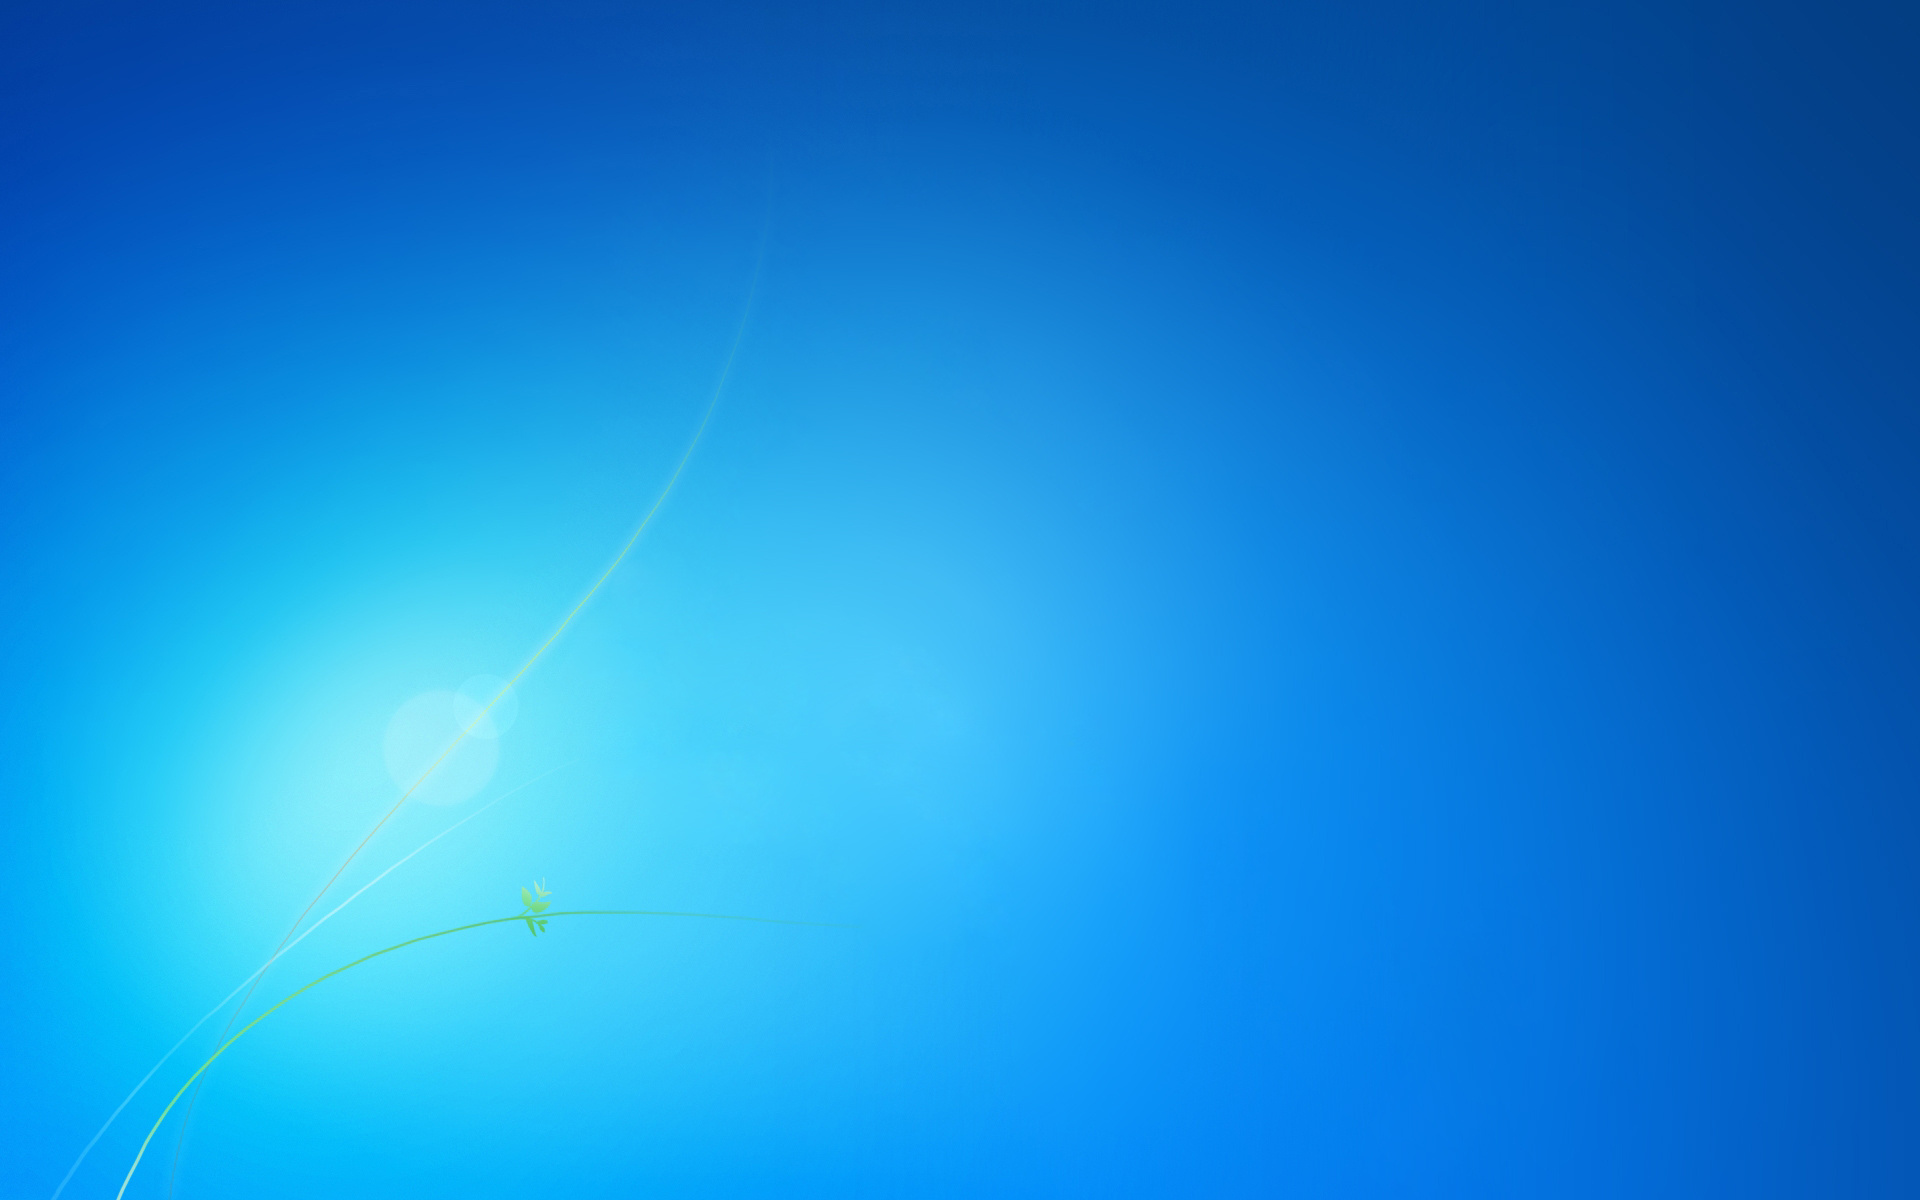 Windows 7 Blue, Operating system theme, Sky-inspired design, Technology interface, Digital aesthetic, 1920x1200 HD Desktop